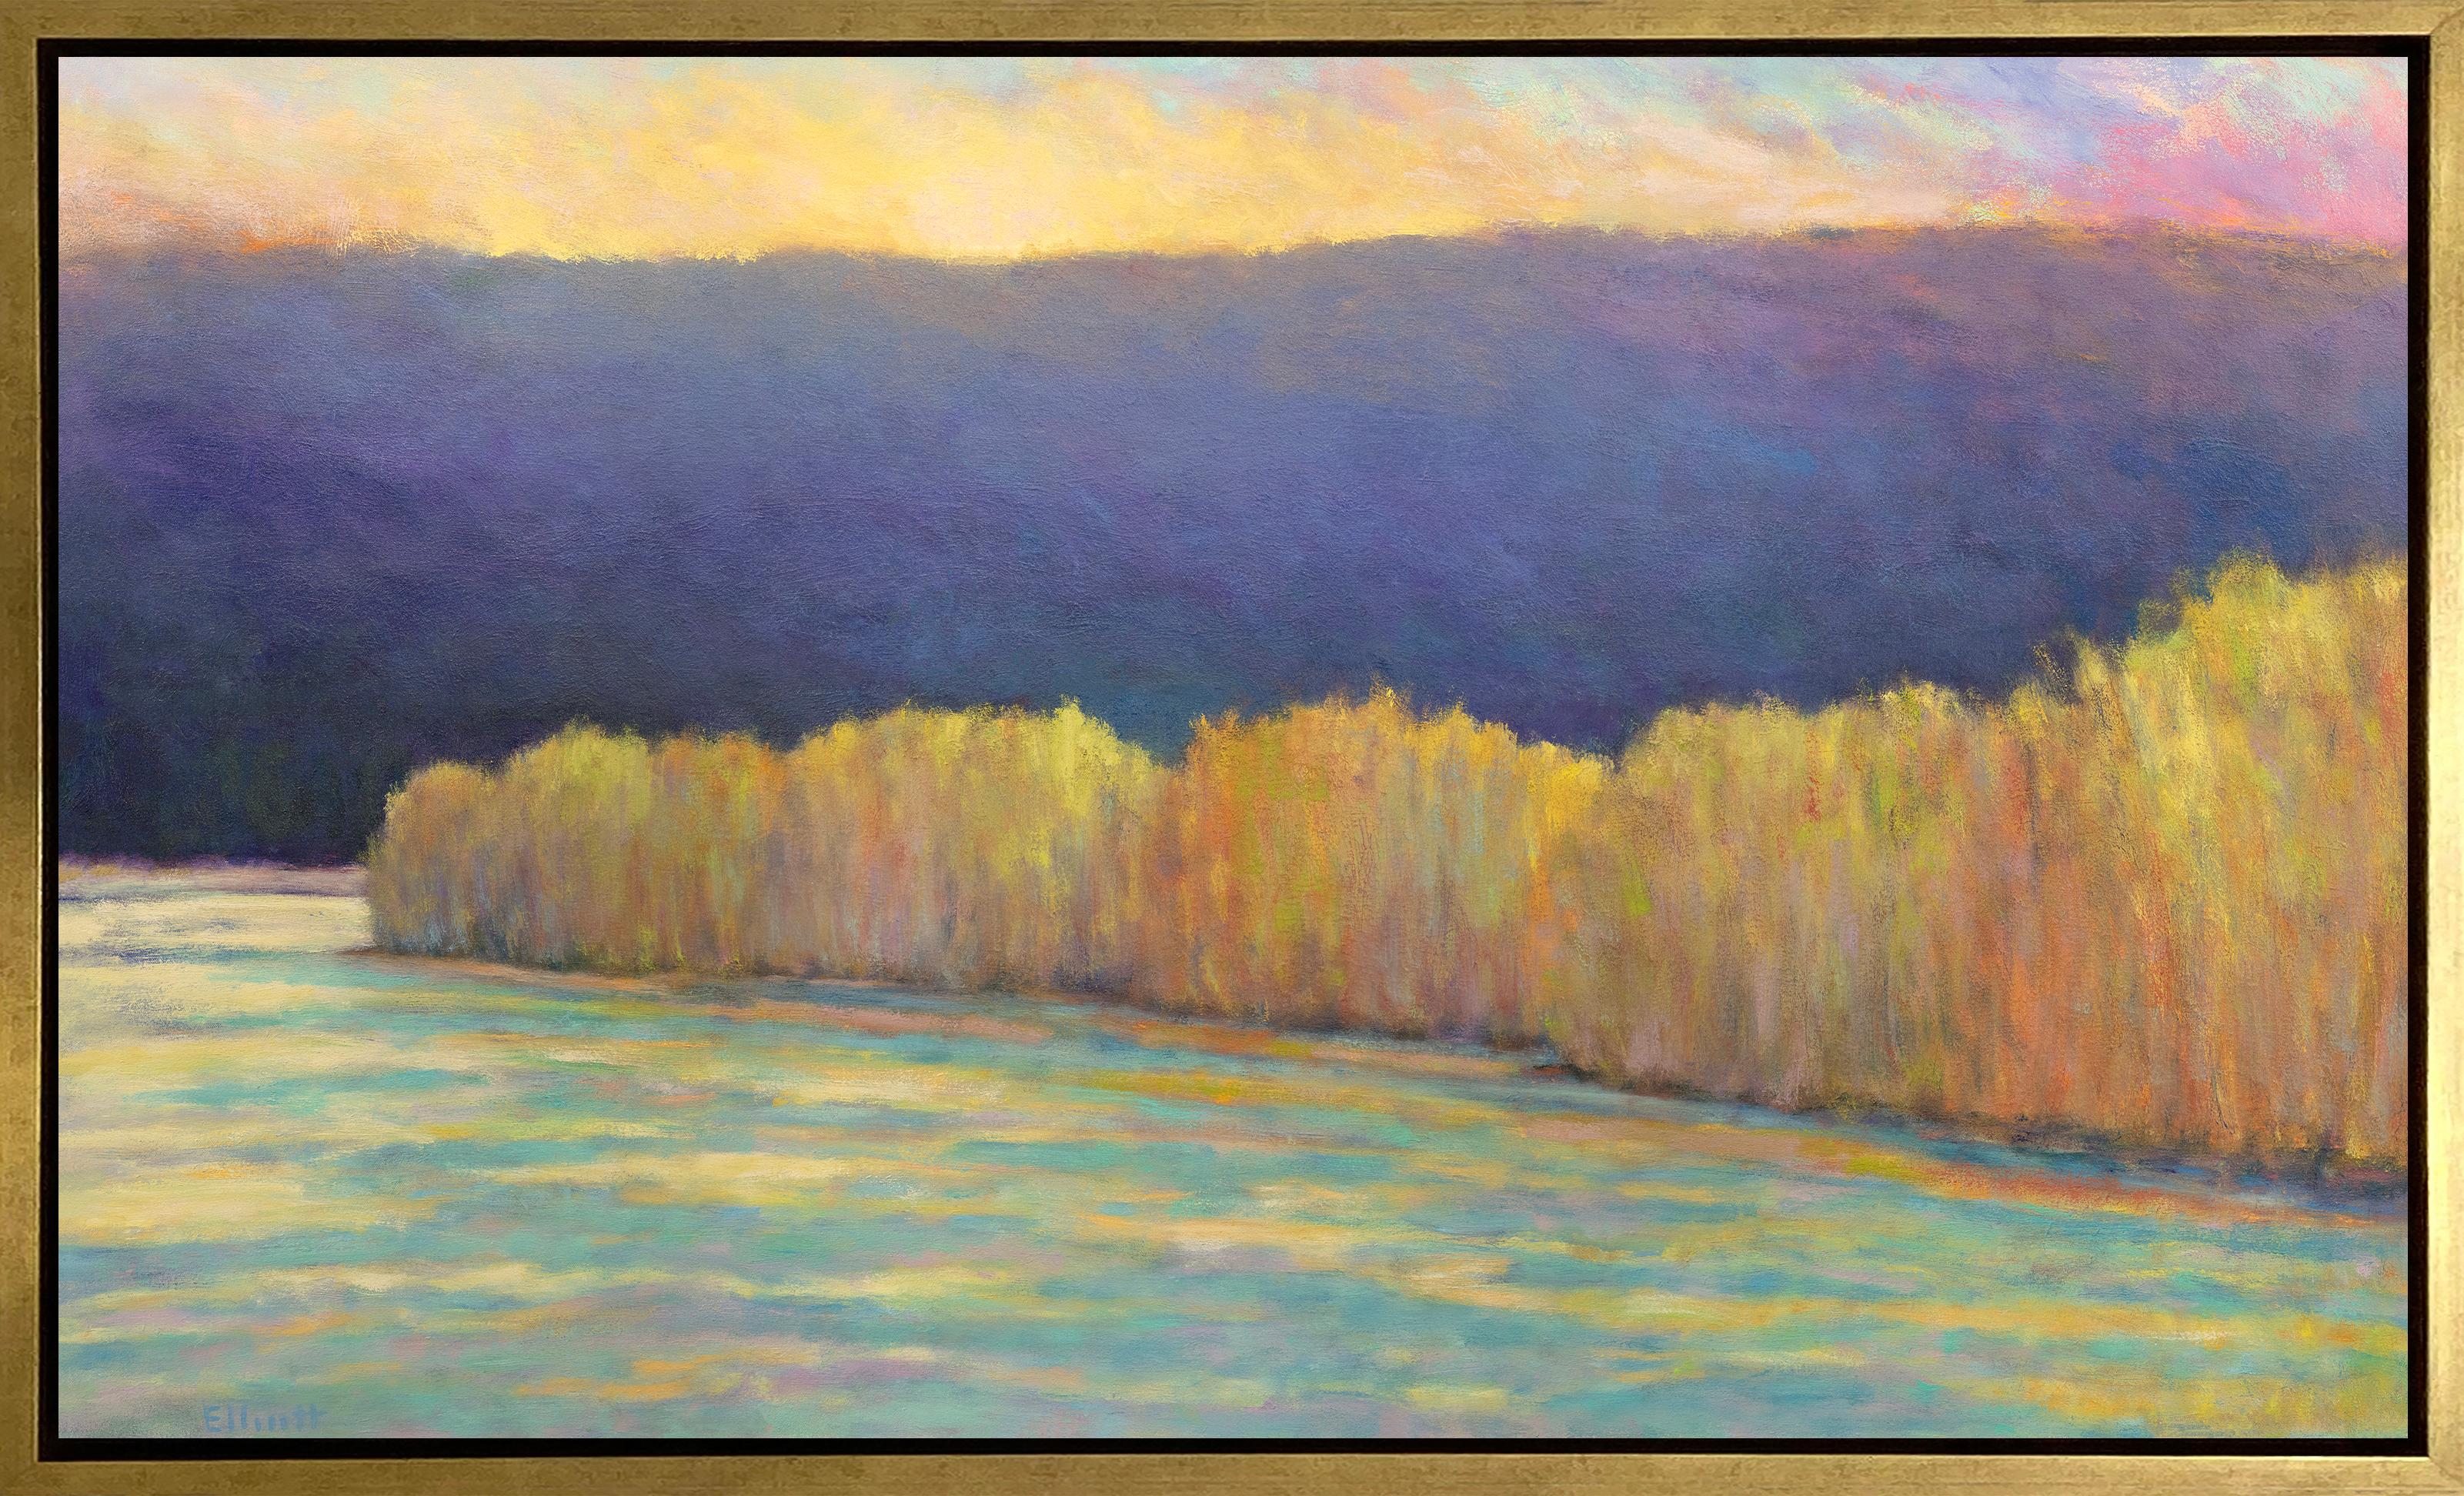 Ken Elliott Landscape Print - "Gold at the River, " Framed Limited Edition Giclee Print, 36" x 60"